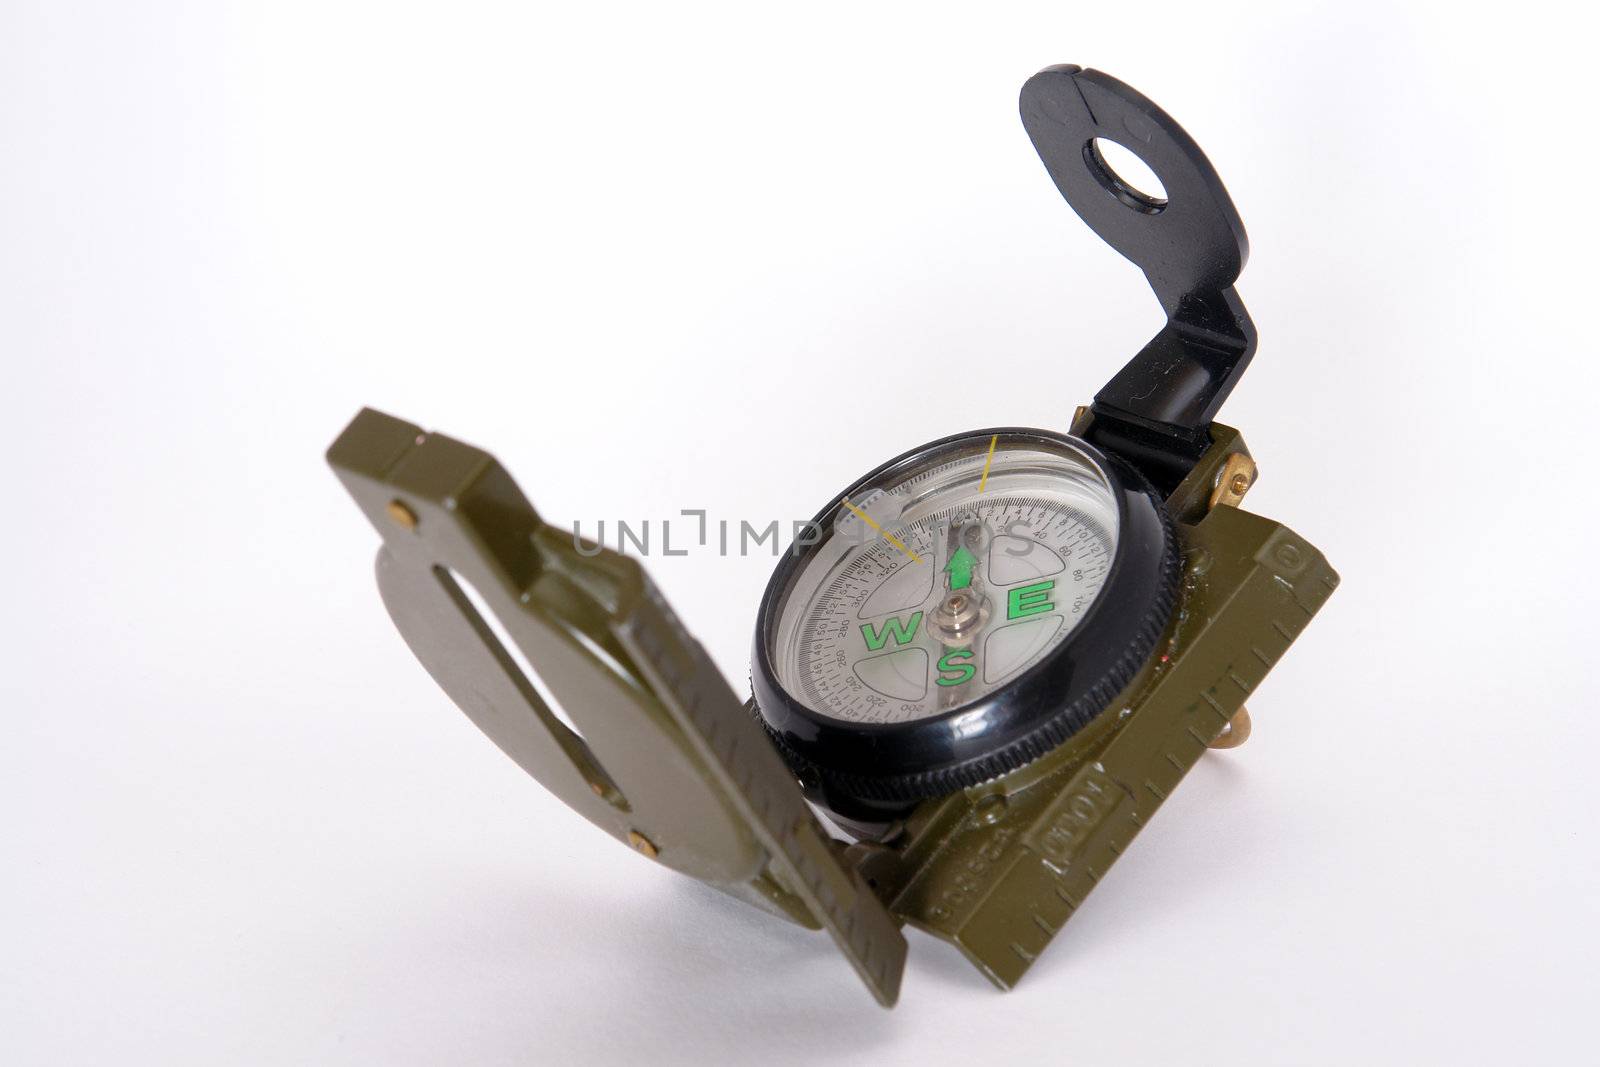    Substantive film military compass                            